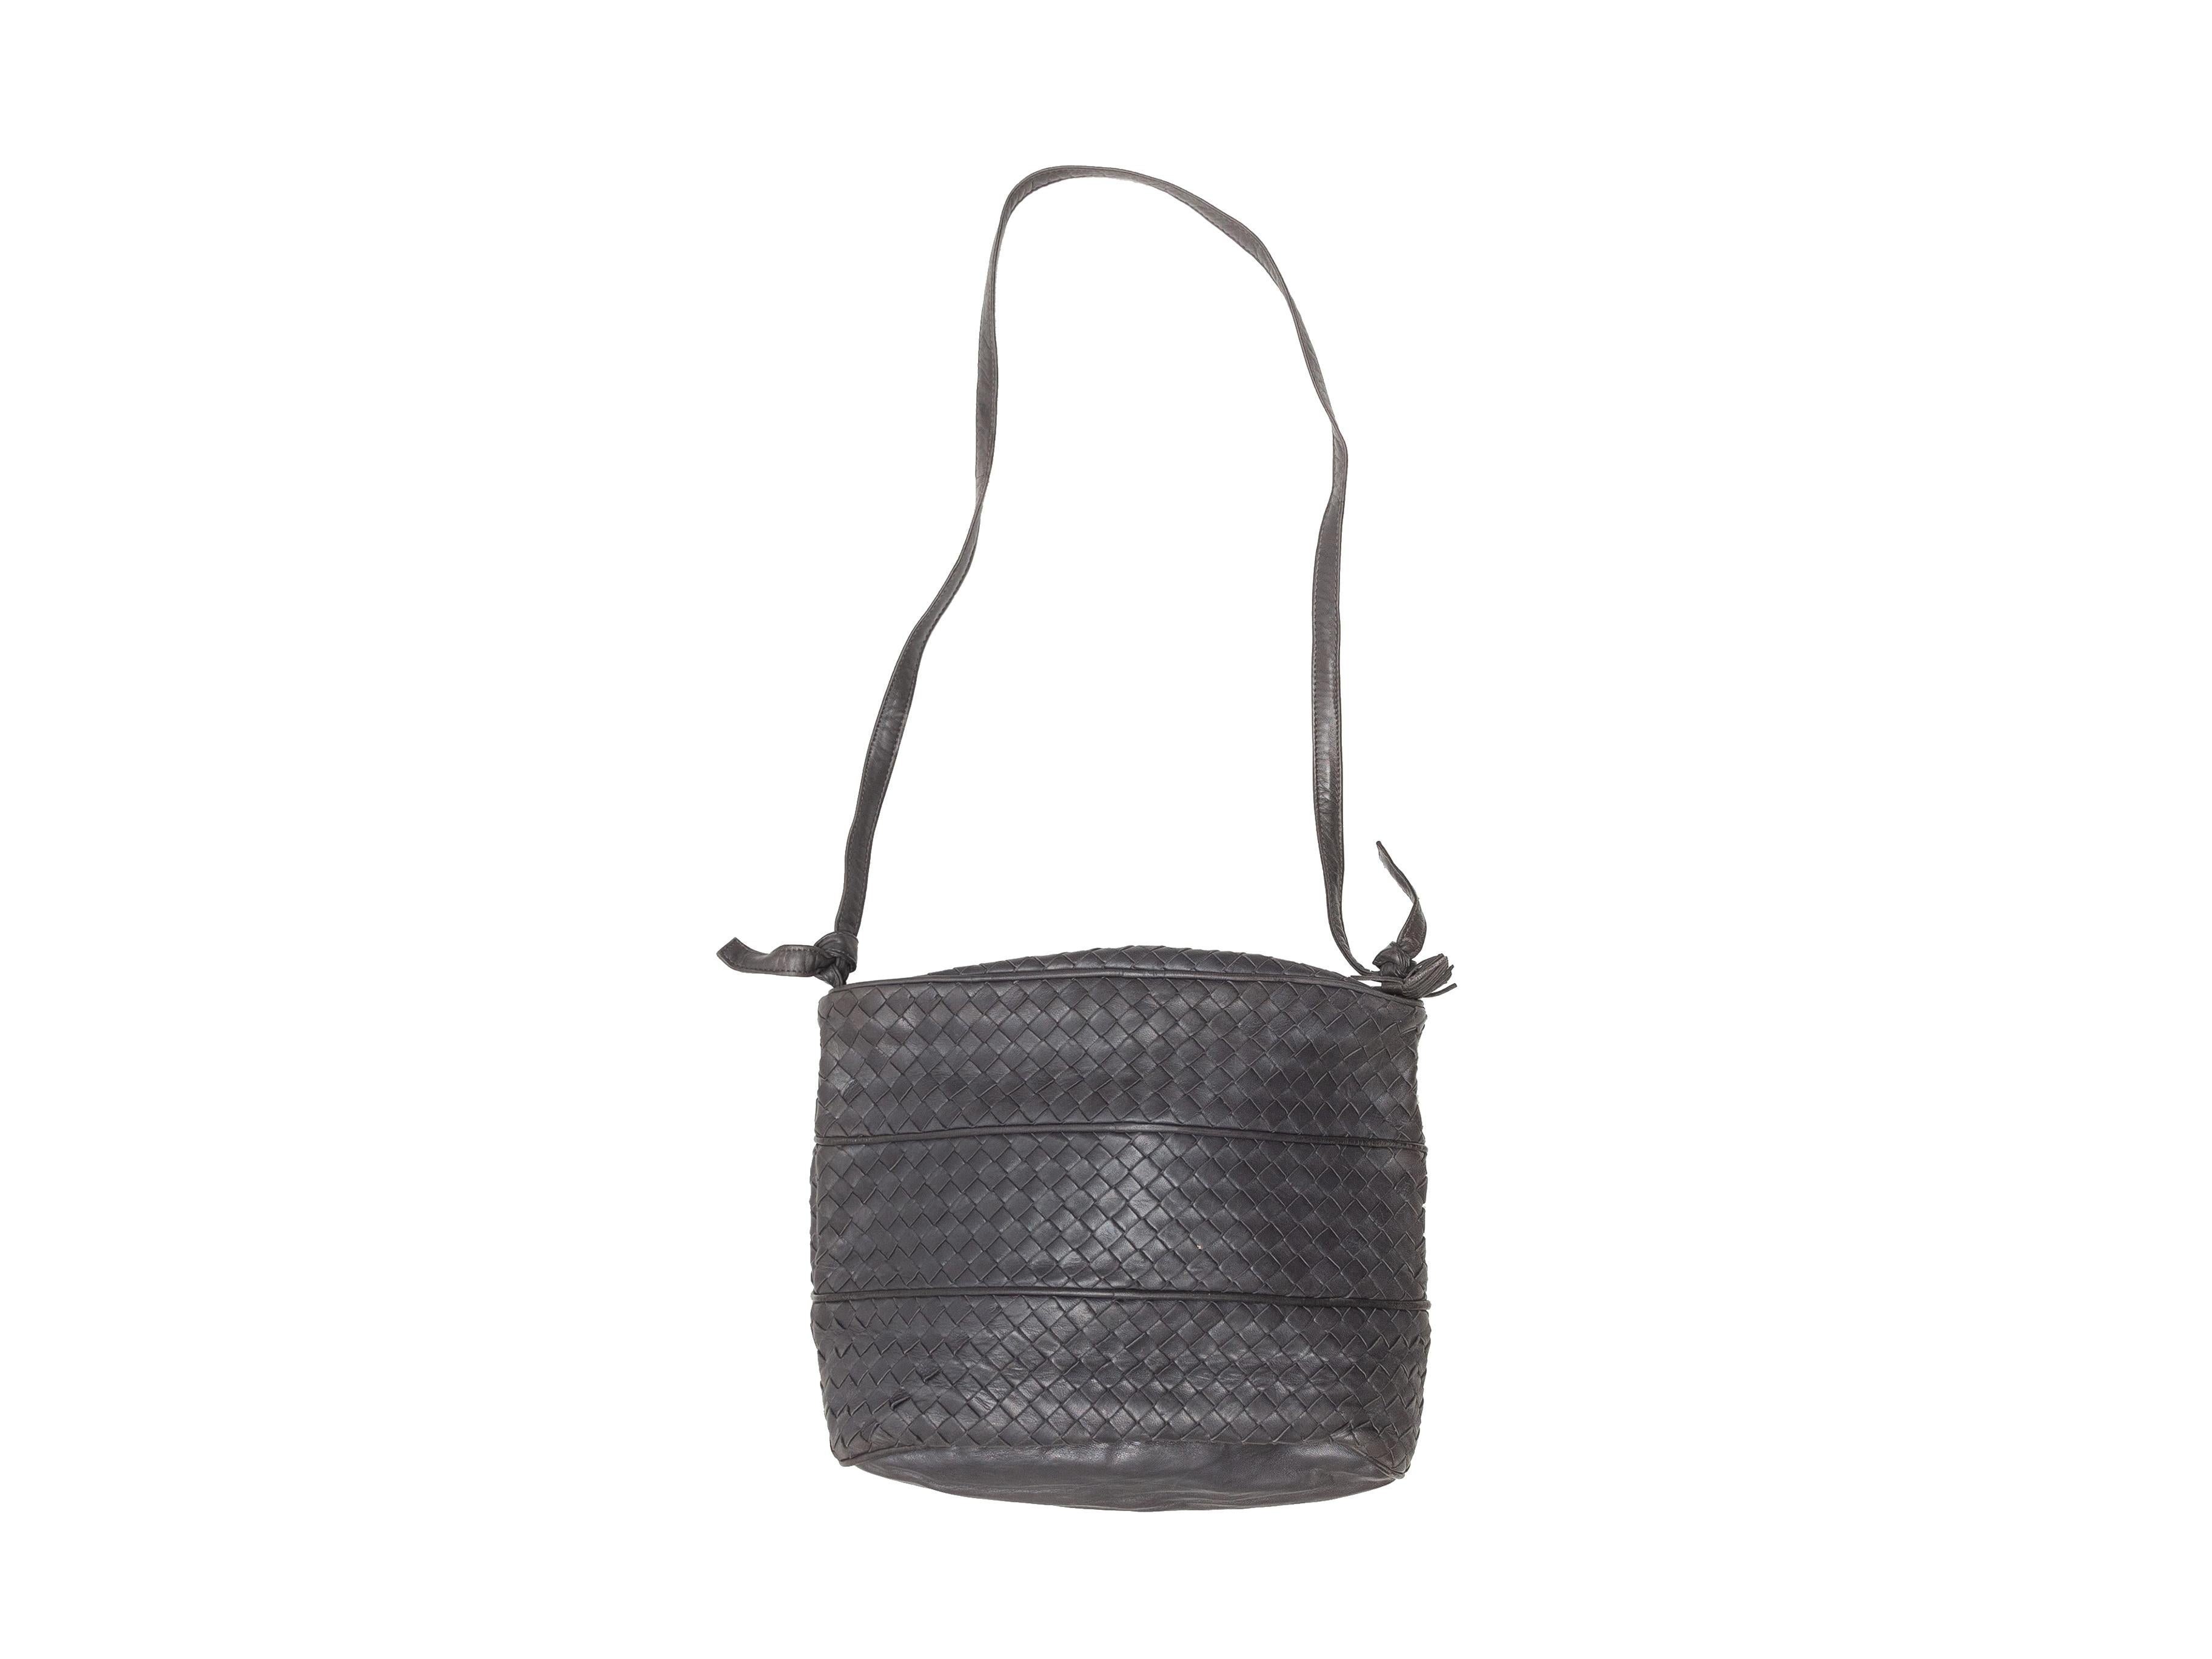 Product details: Vintage charcoal Intrecciato leather shoulder bag by Bottega Veneta. Zip closure at top. 12.5